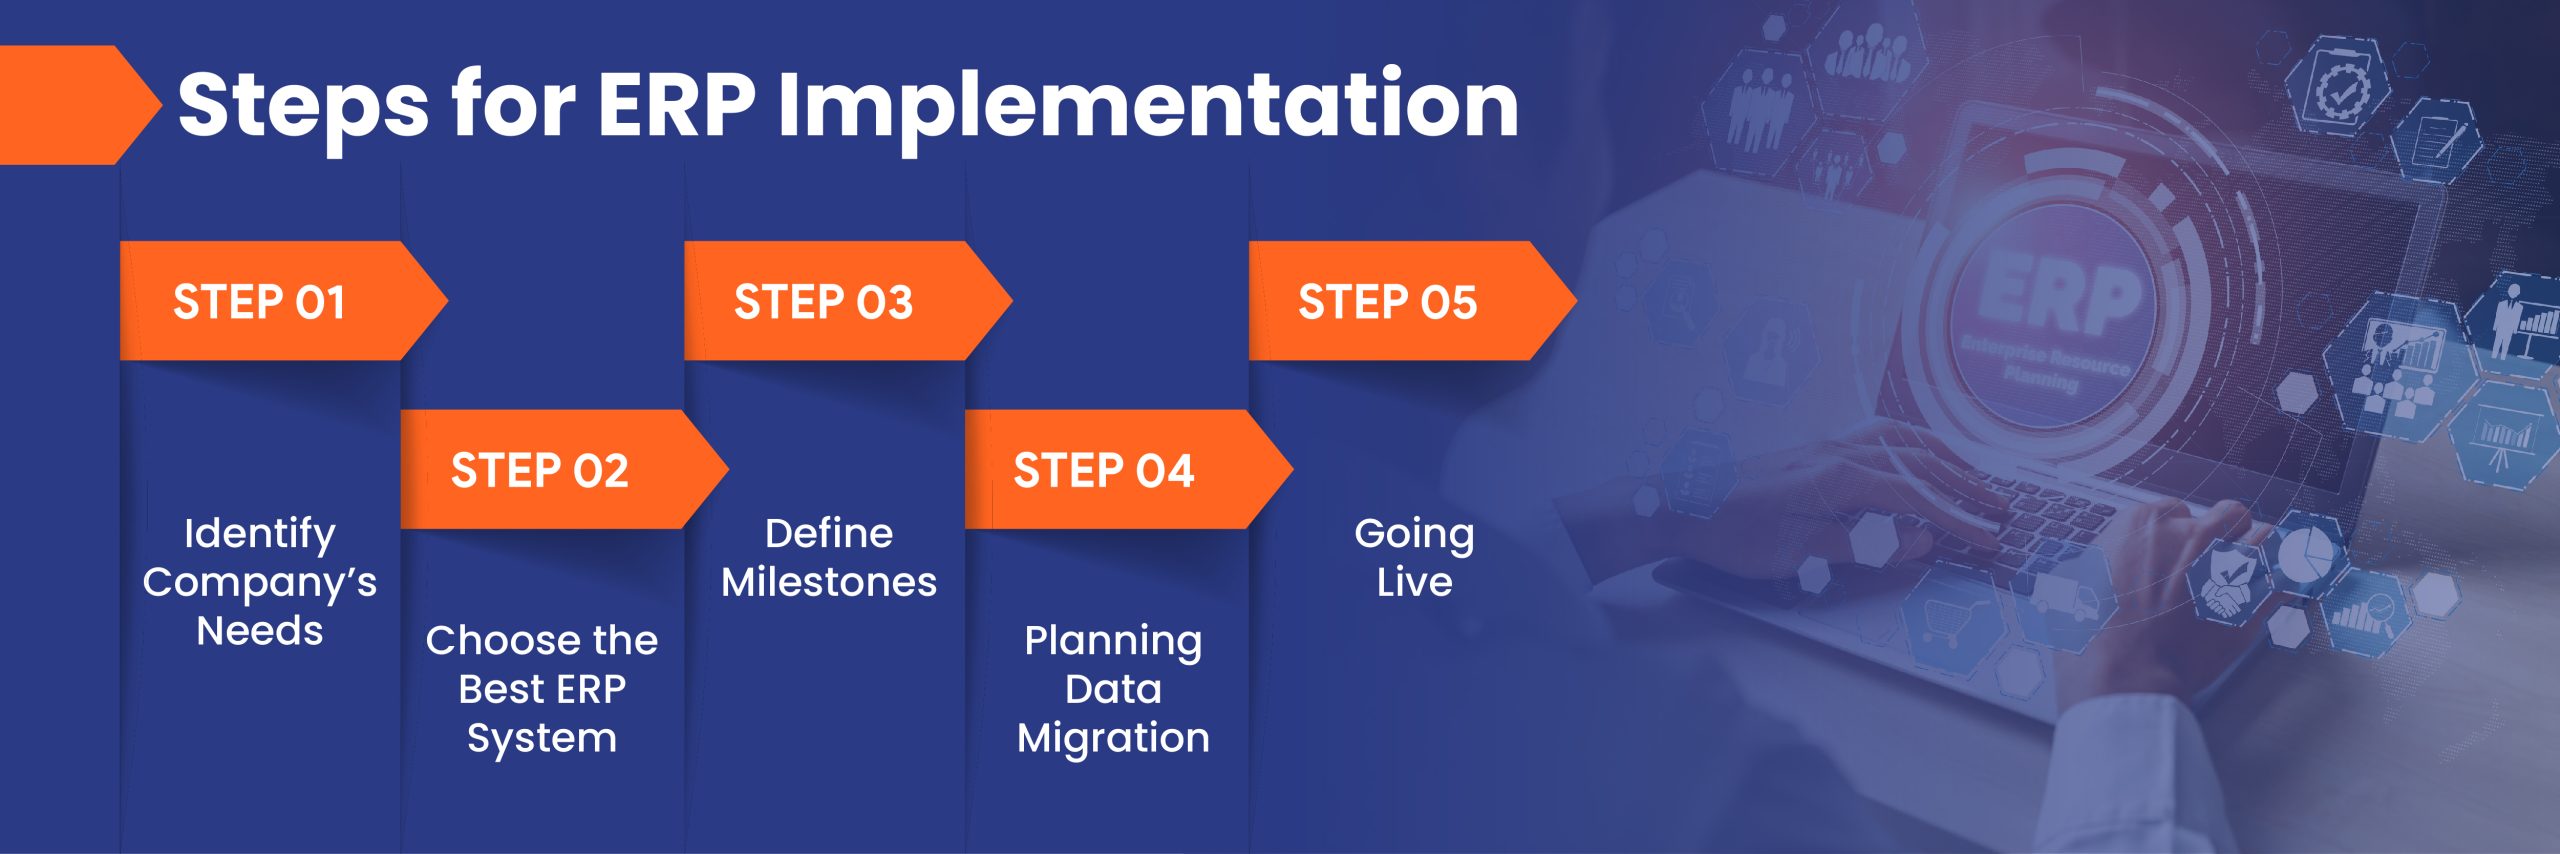 Steps for ERP Implementation